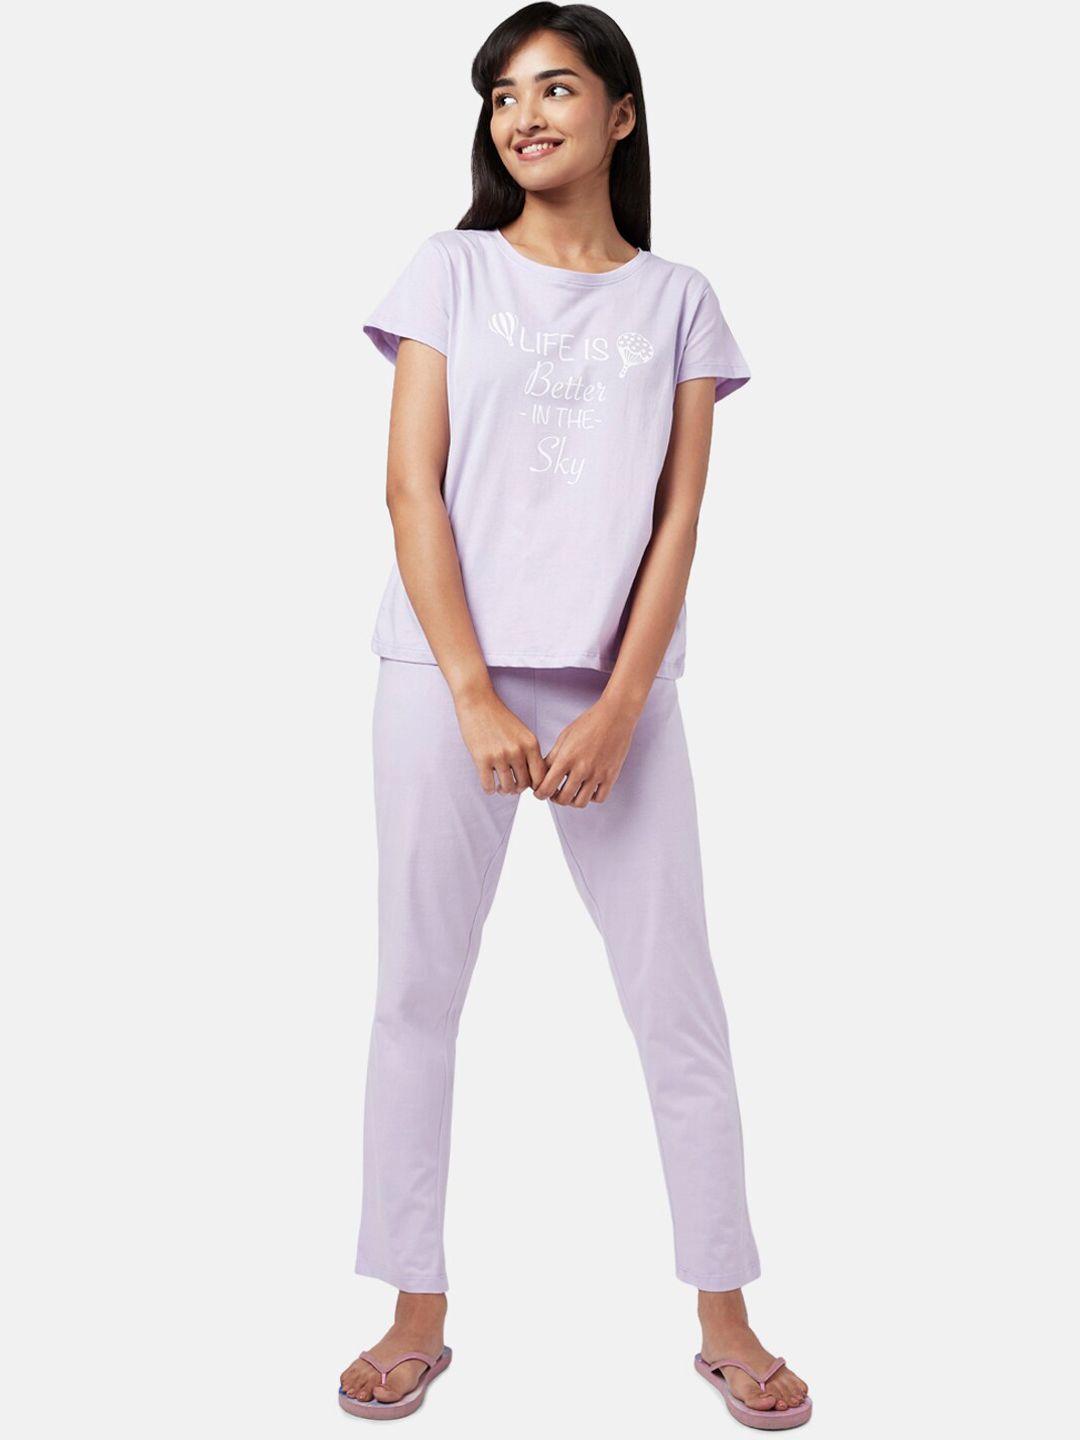 yu-by-pantaloons-women-purple-&-white-printed-night-suit